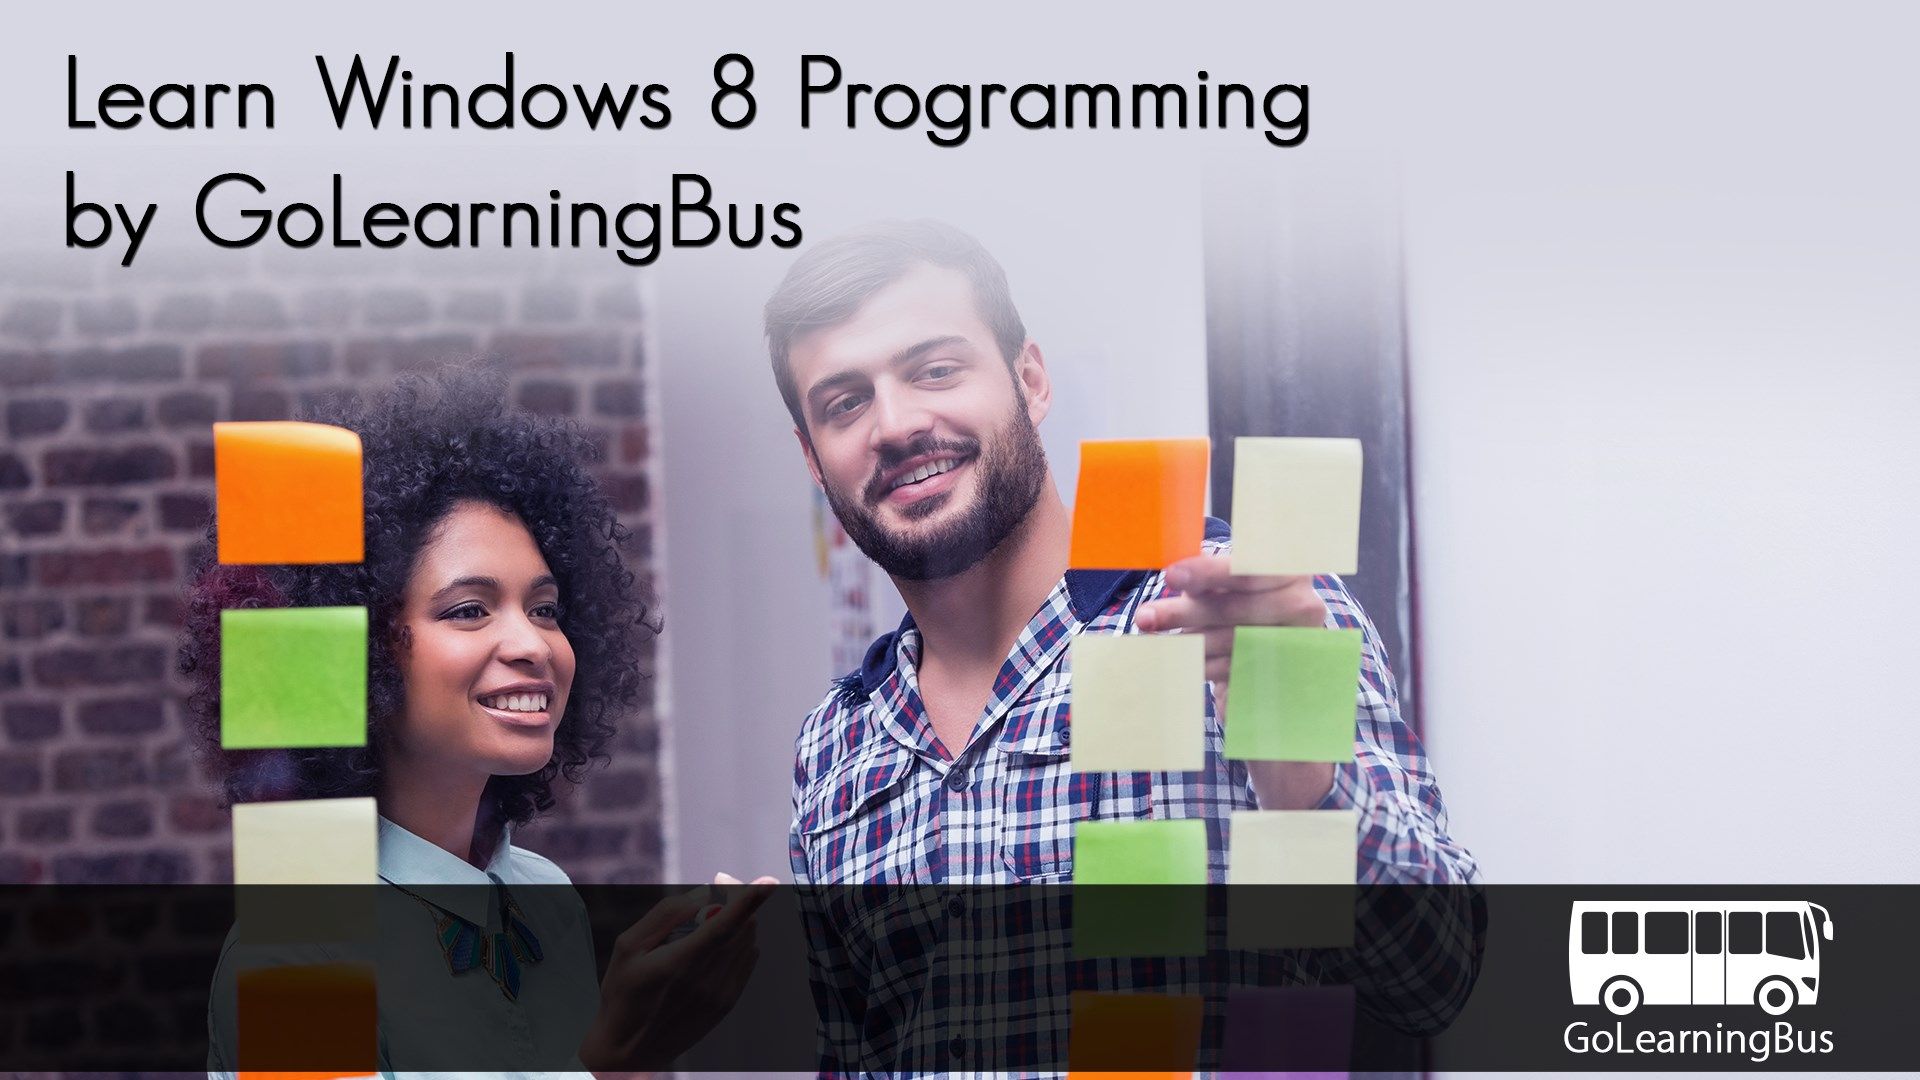 Windows 8 Programming by WAGmob